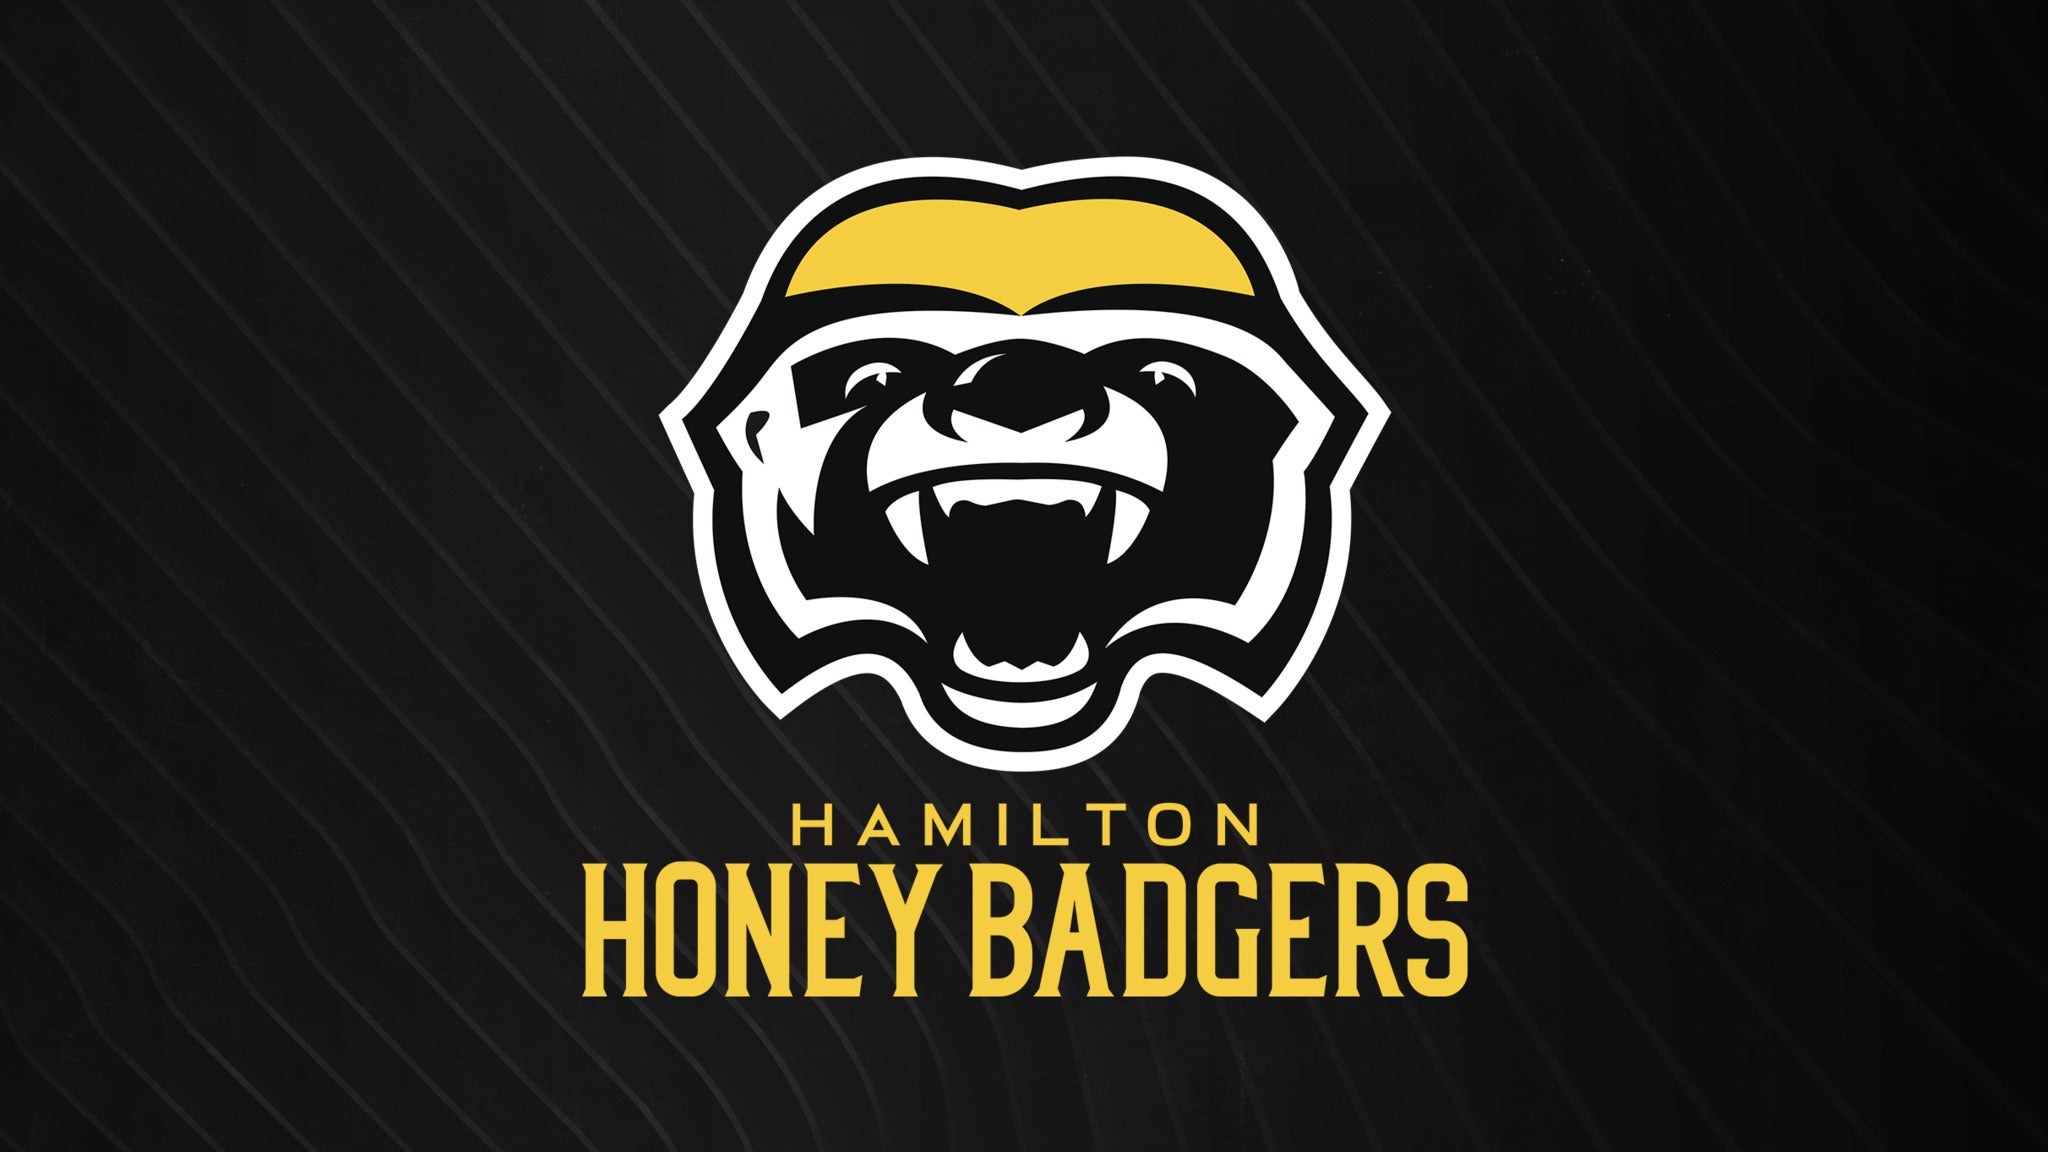 Hamilton Honey Badgers vs. Niagara River Lions in Hamilton promo photo for Ticketmaster presale offer code